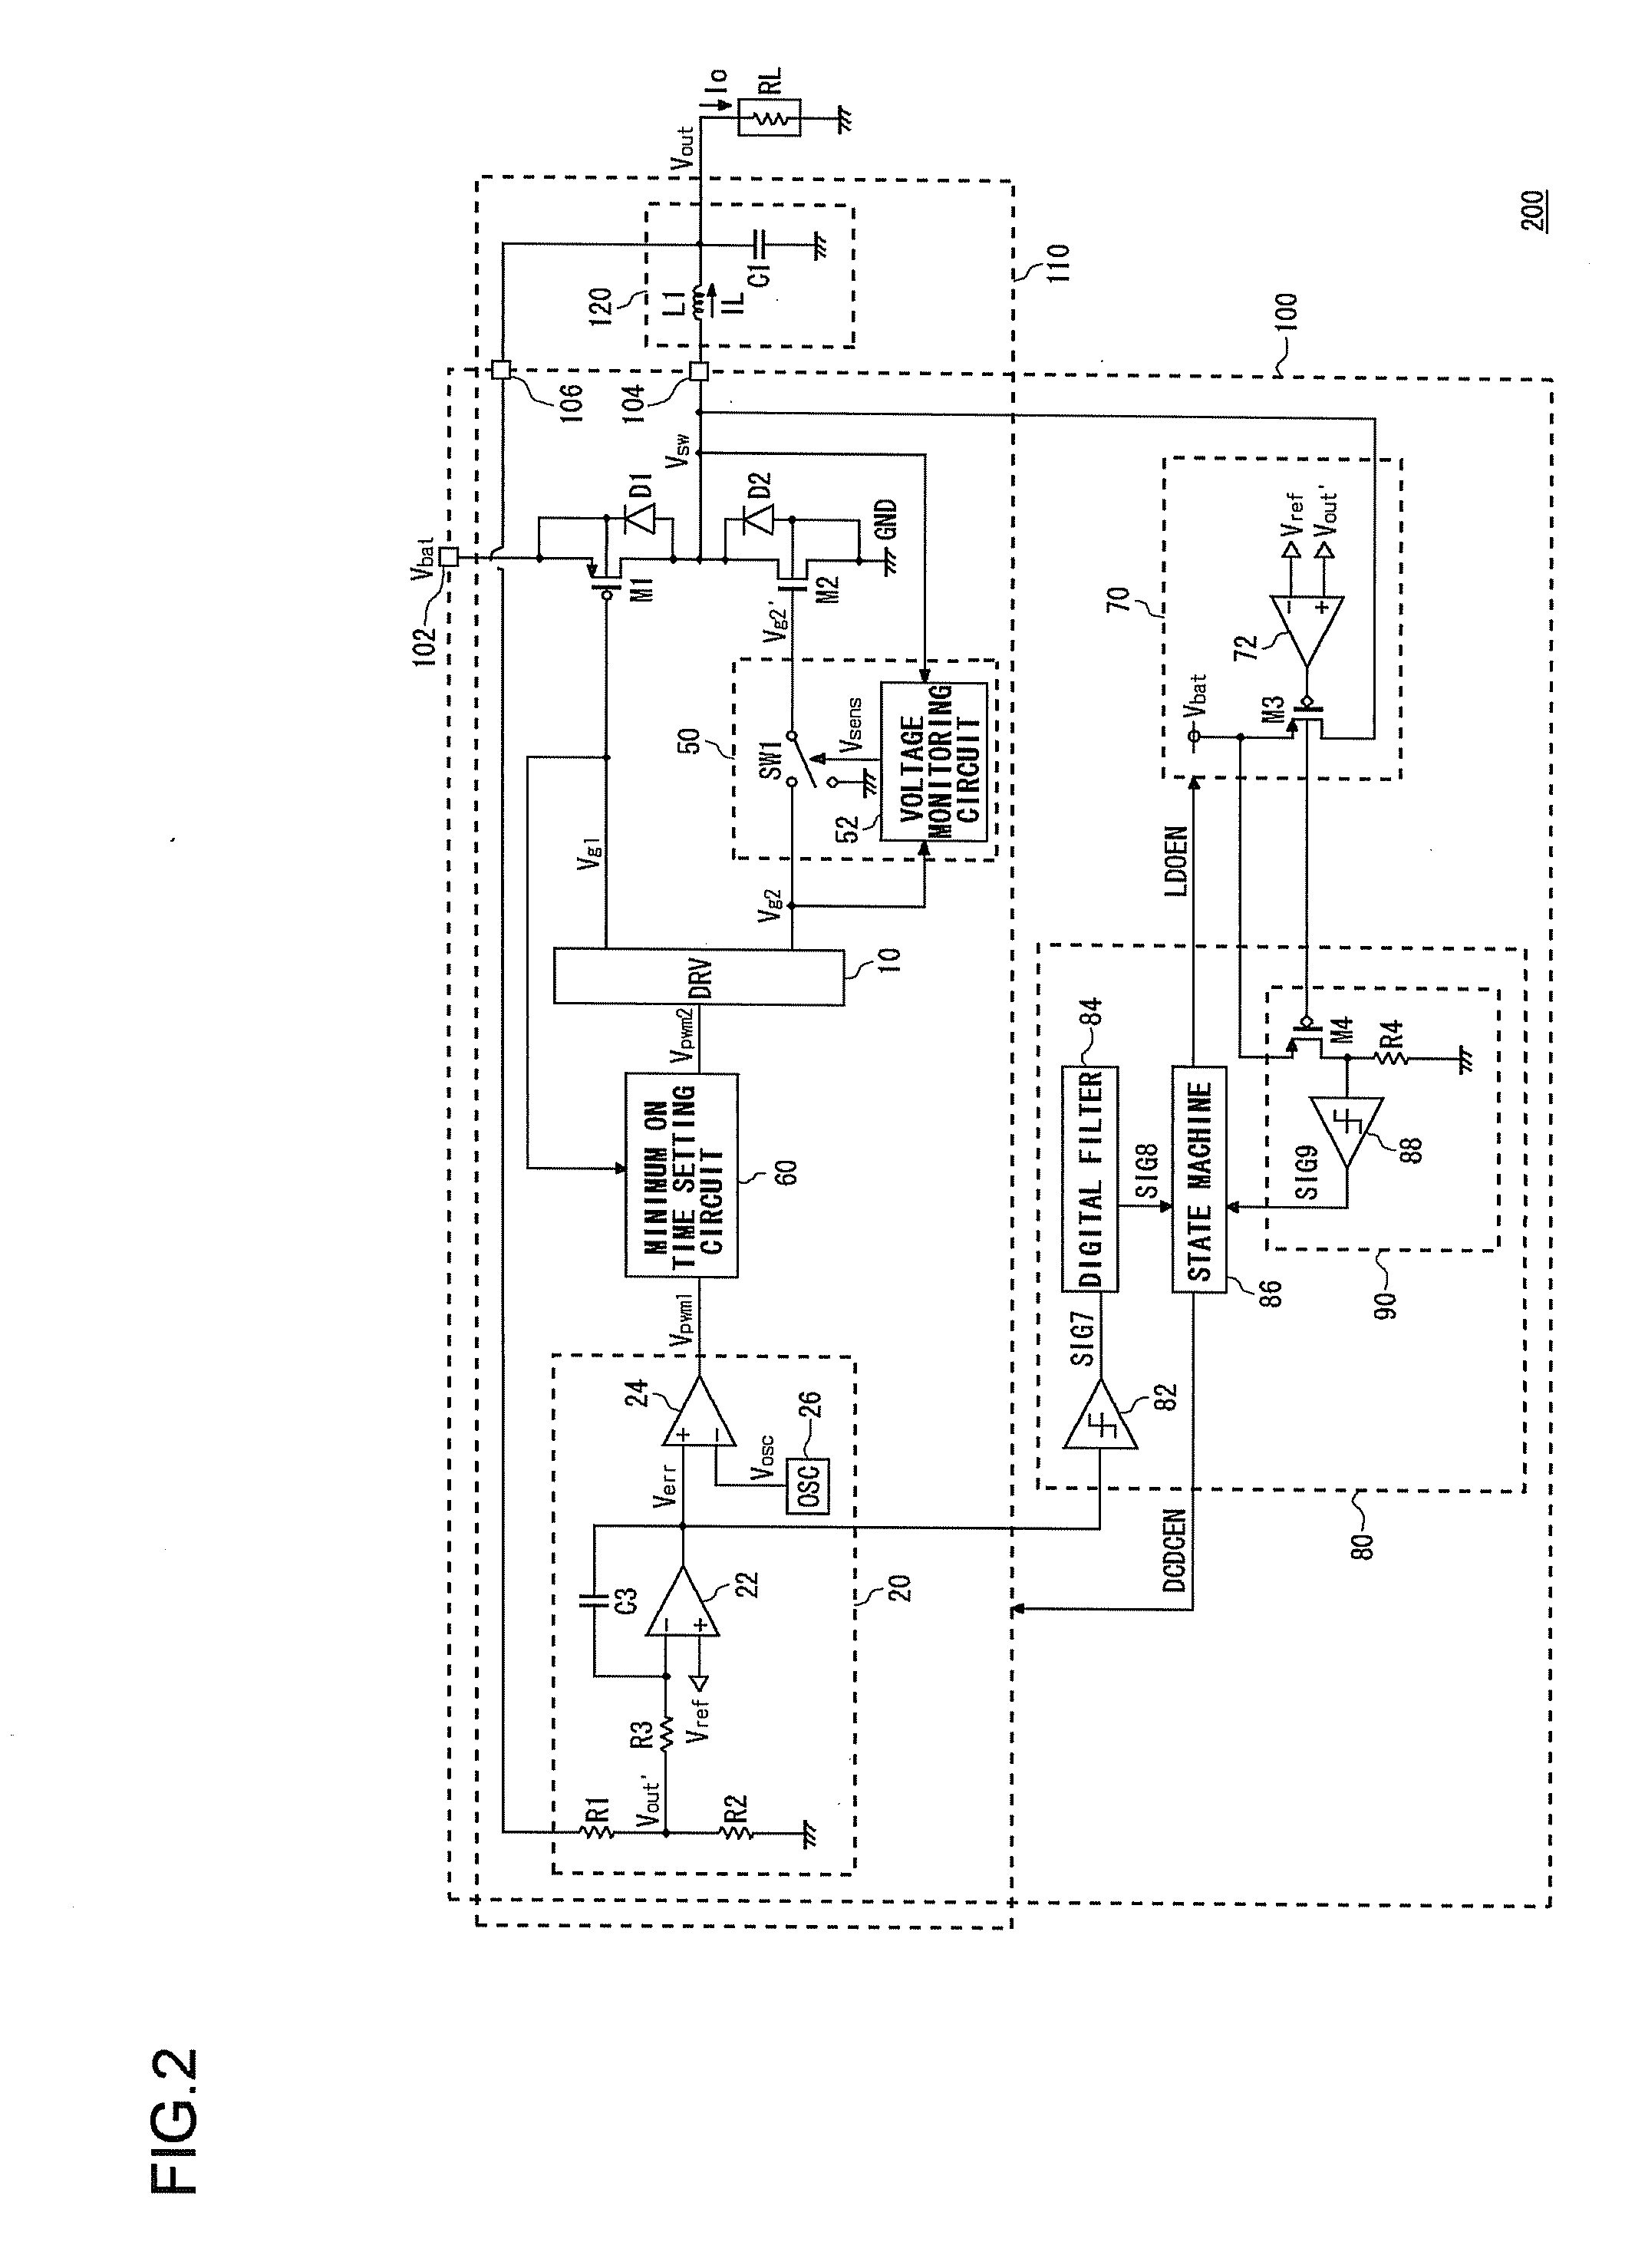 Power supply apparatus having switchable switching regulator and linear regulator